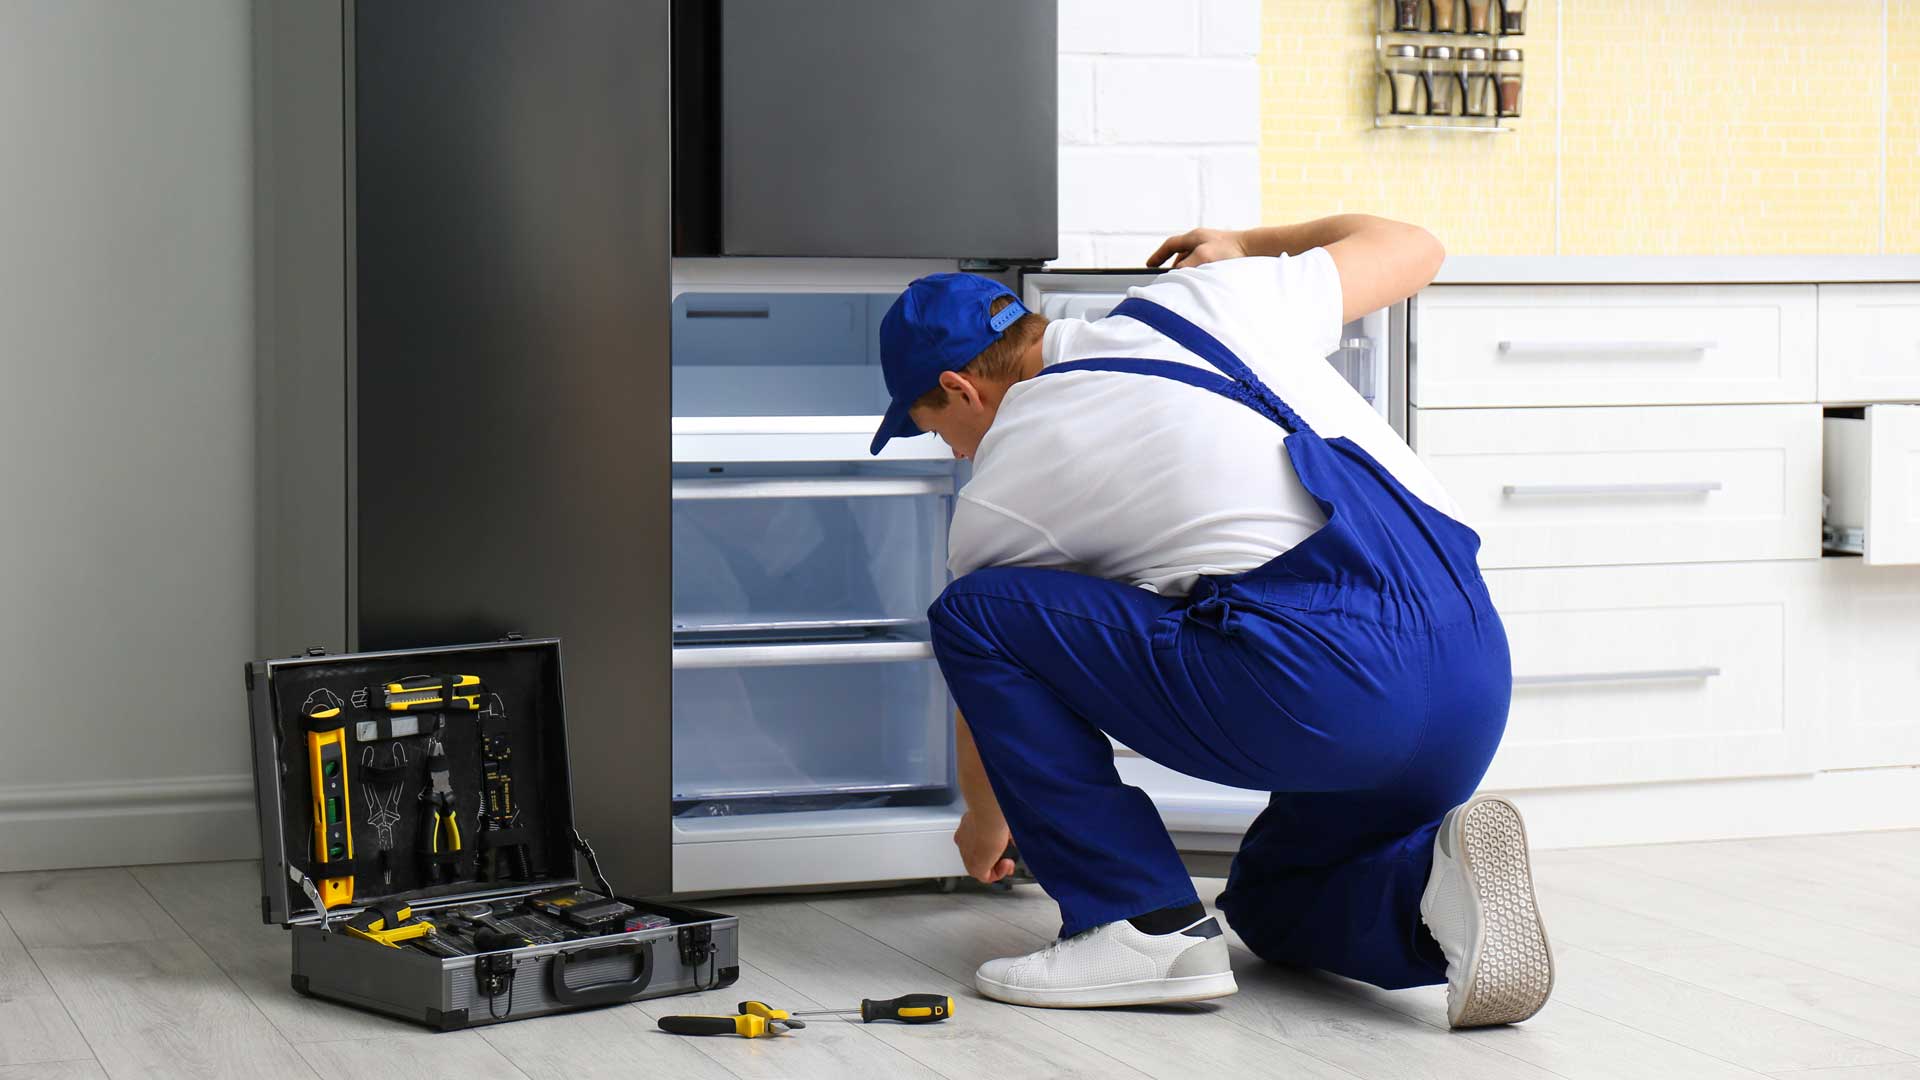 A technician in blue overalls repairing a refrigerator